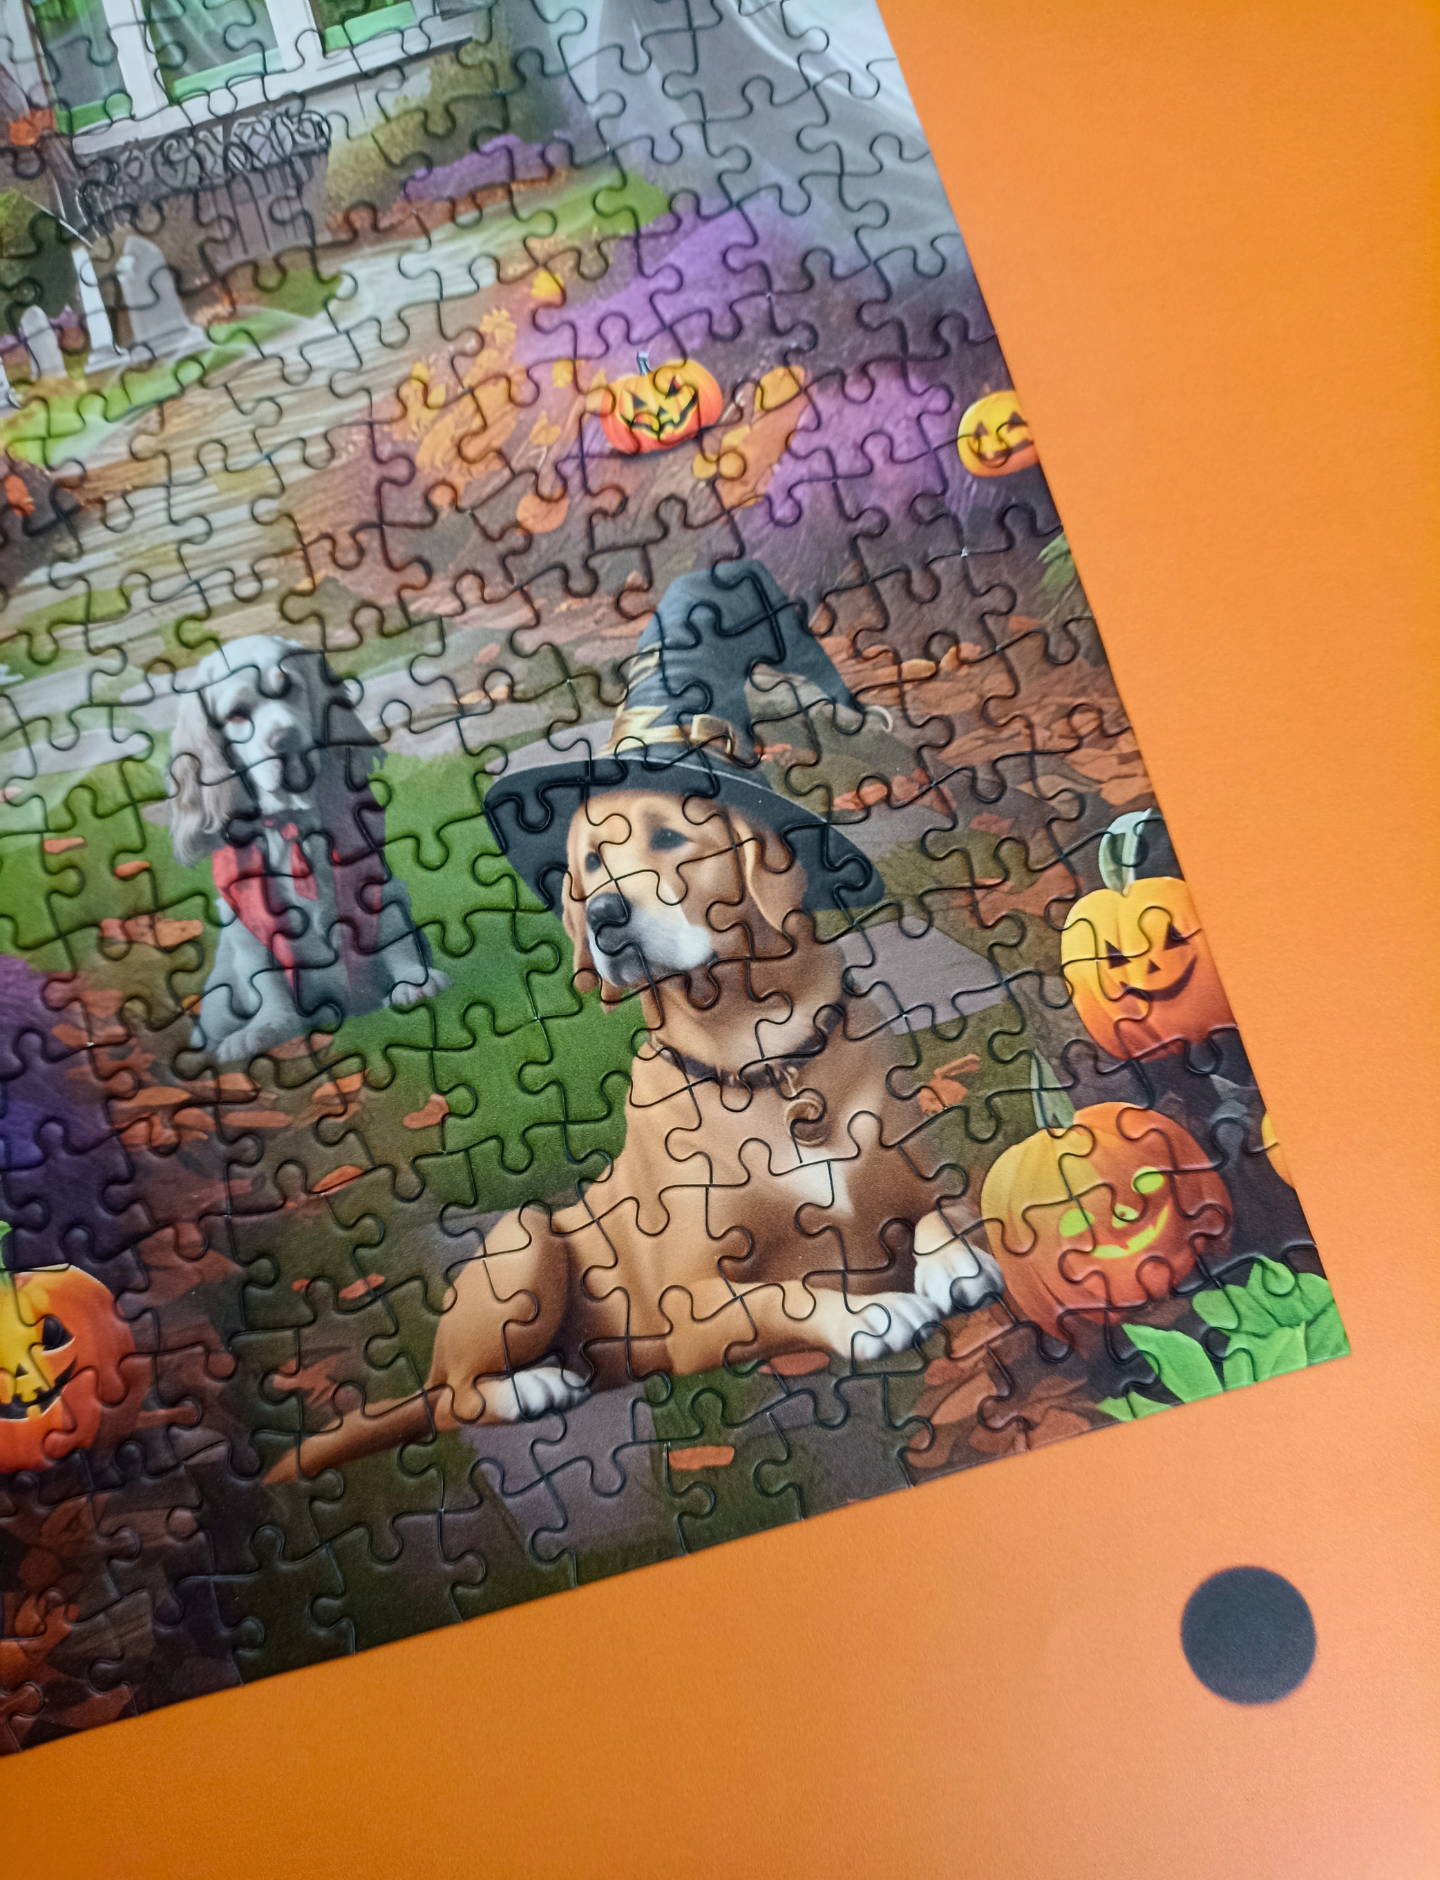 Sunsout Dog World 300 PC Jigsaw Puzzle